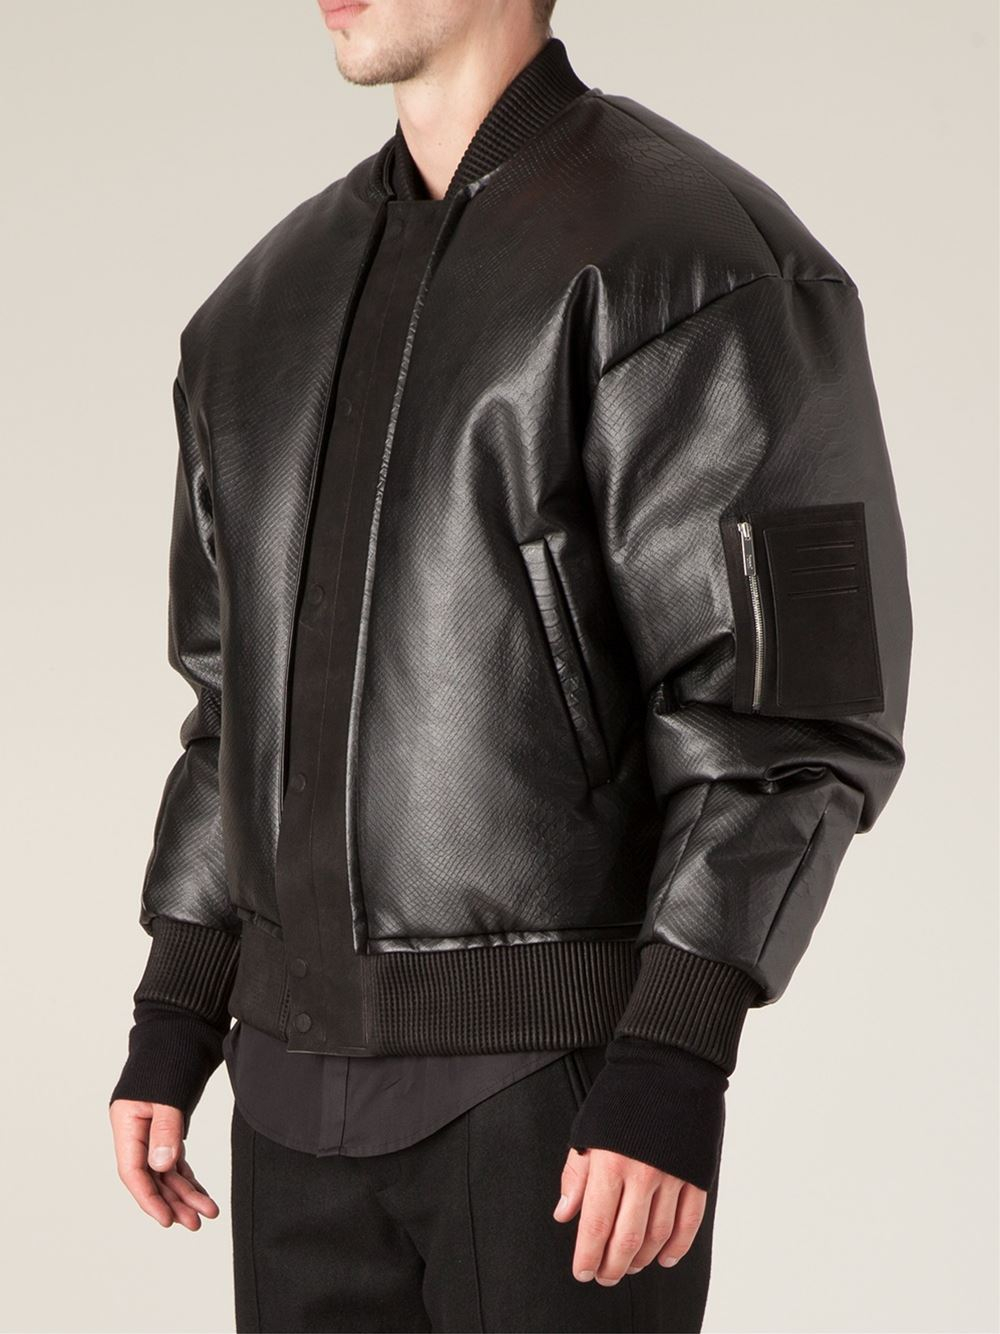 Juun.J Faux Leather Bomber Jacket in Black for Men - Lyst